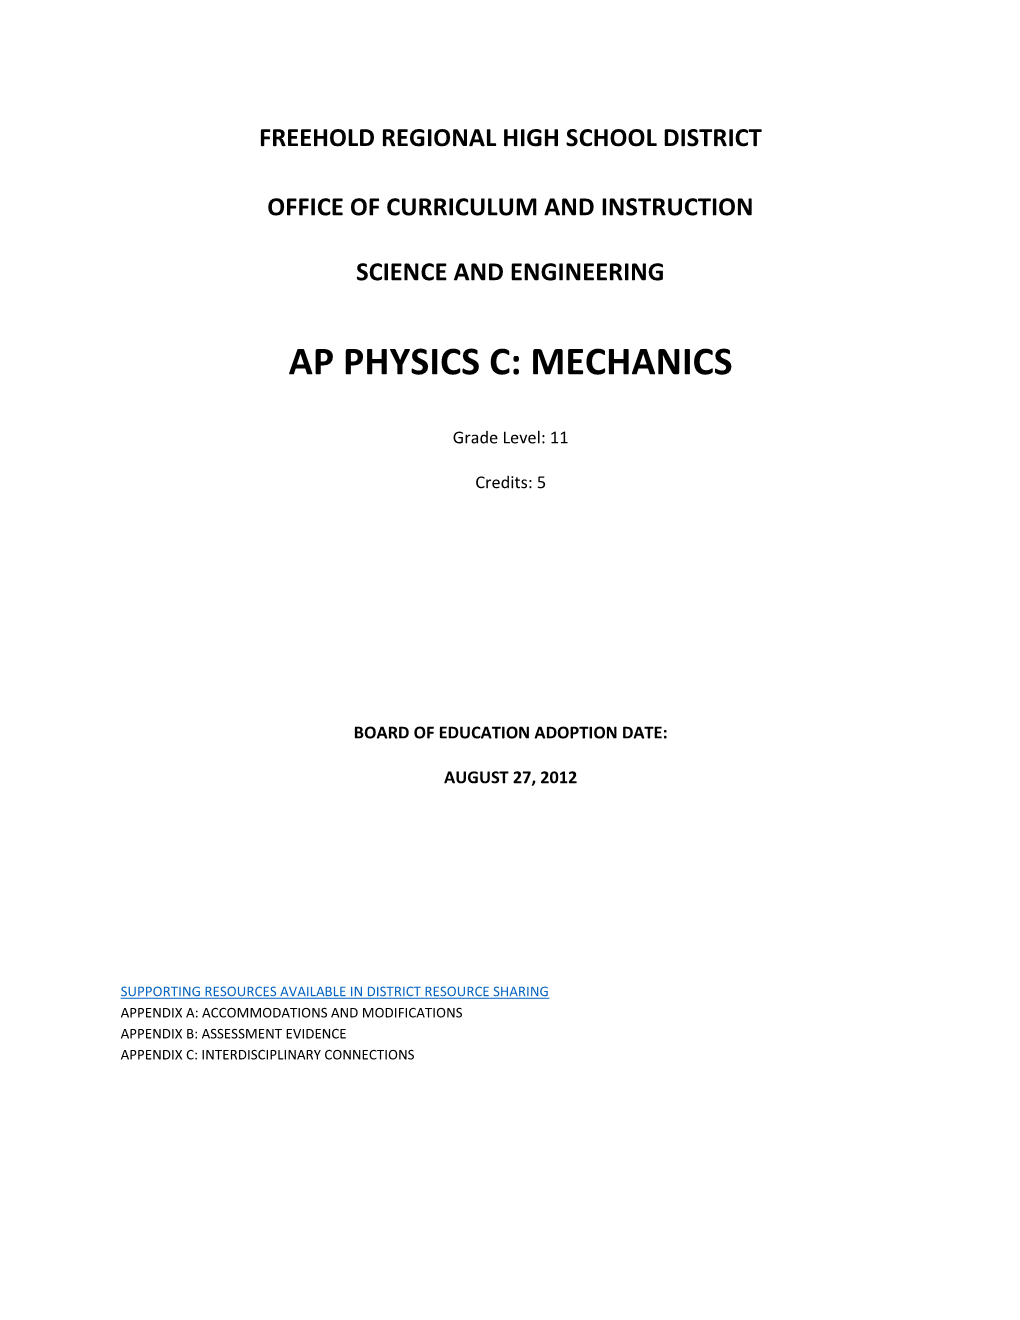 Advanced Placement Physics C